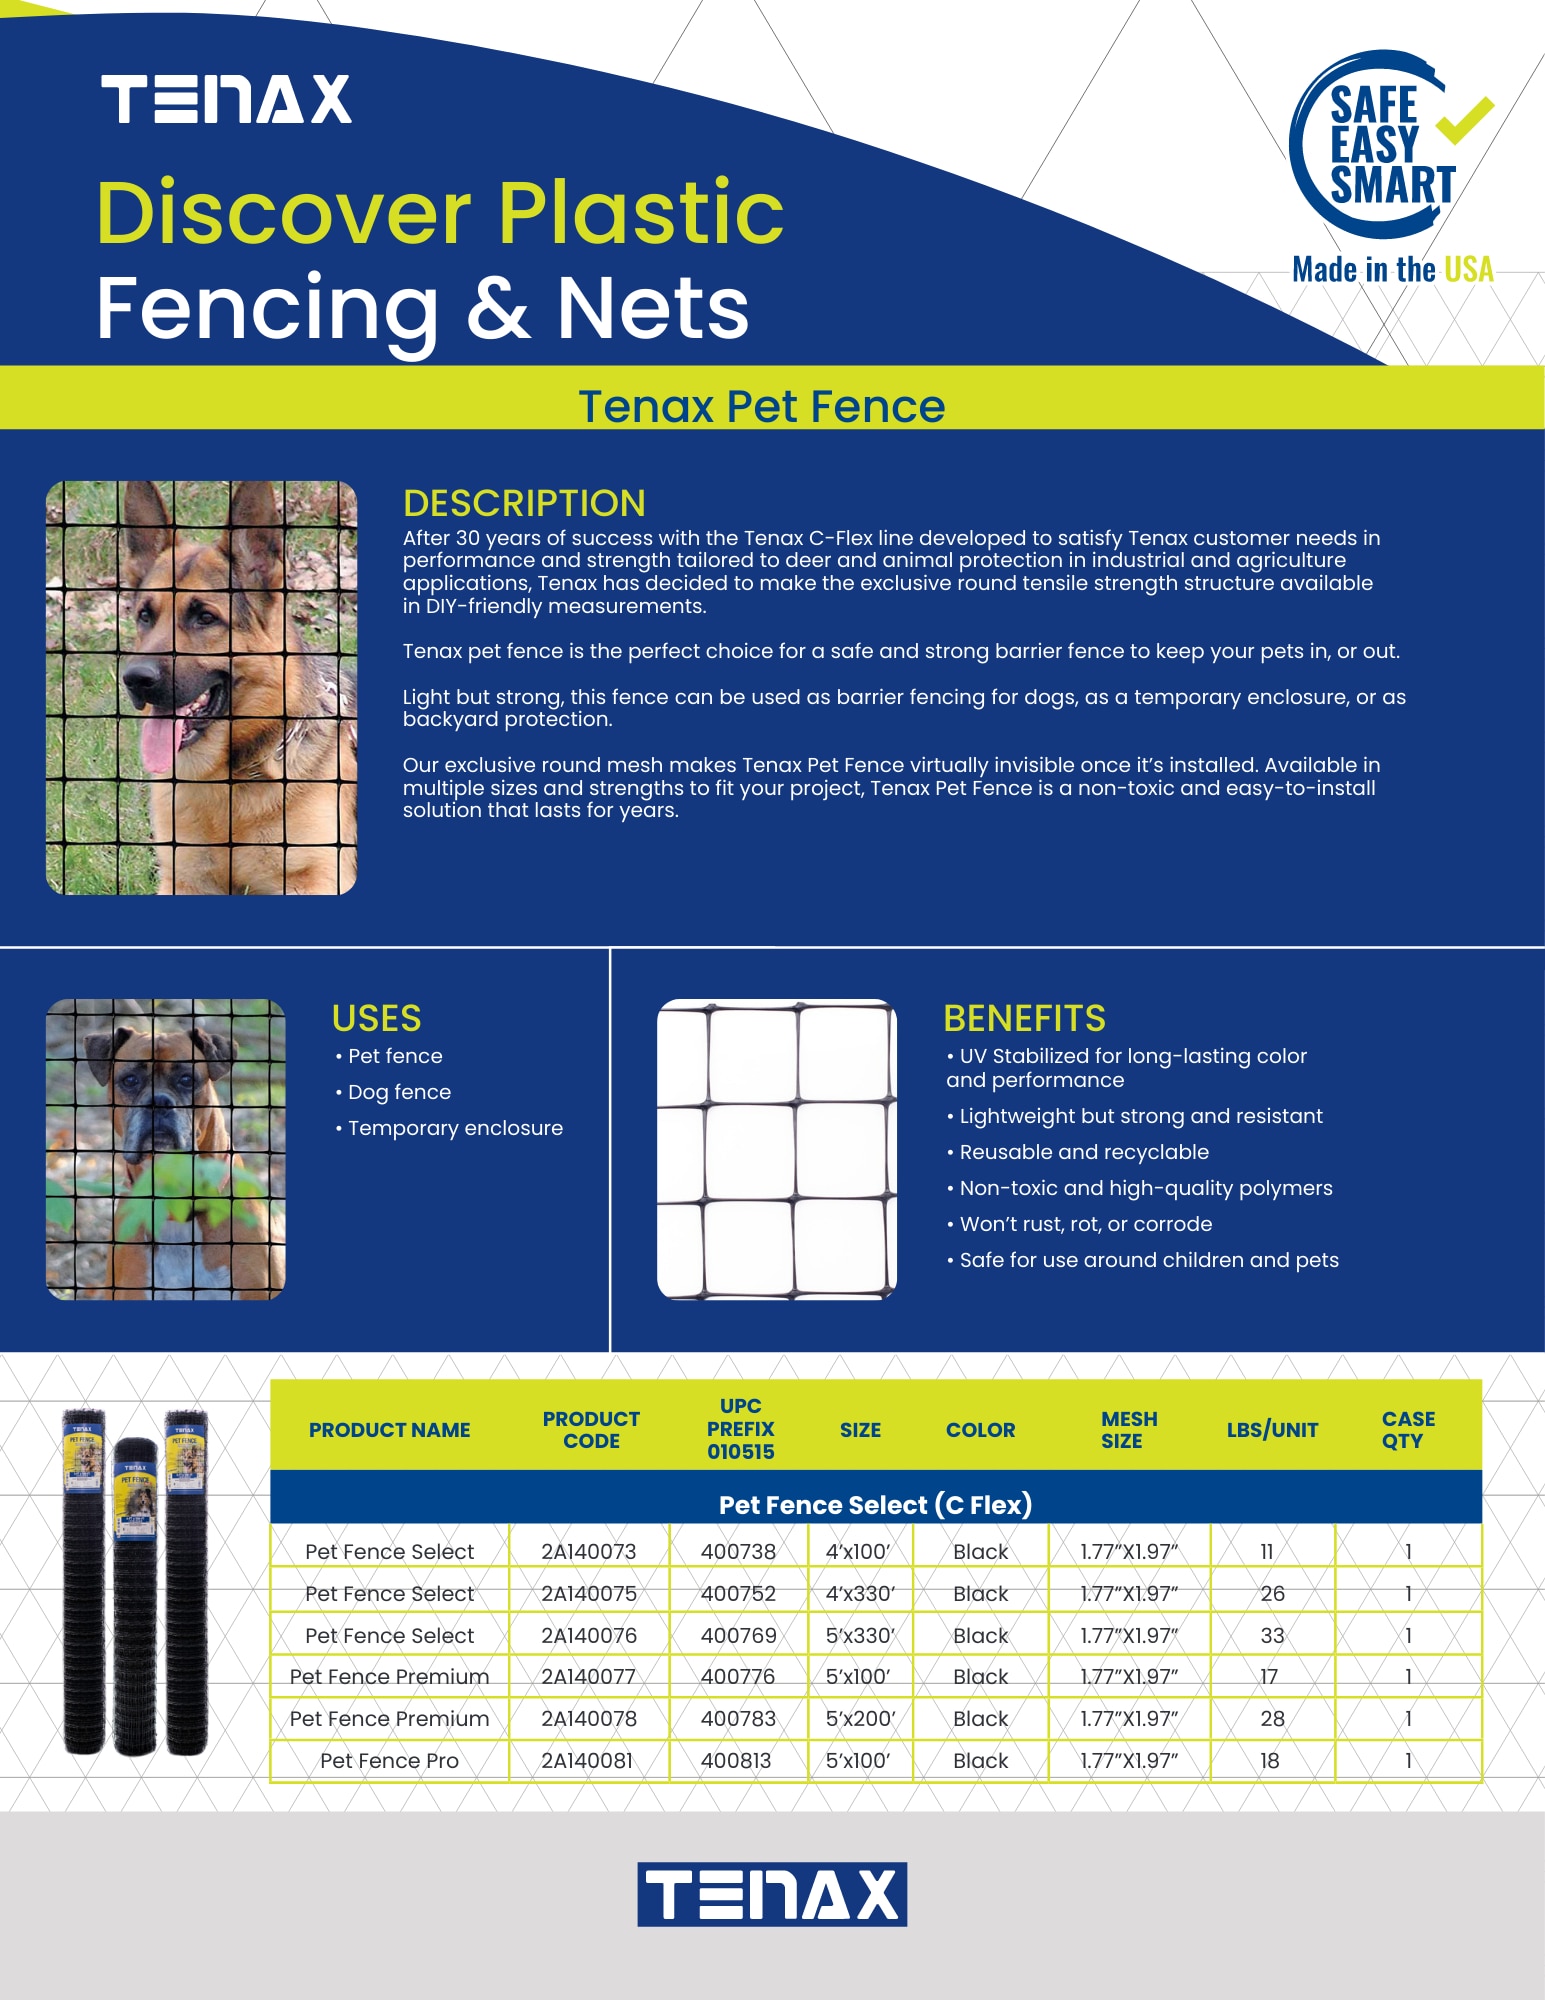 TENAX Pet Fence Premium 5 ft. x 100 ft. Garden Fence 2A140077